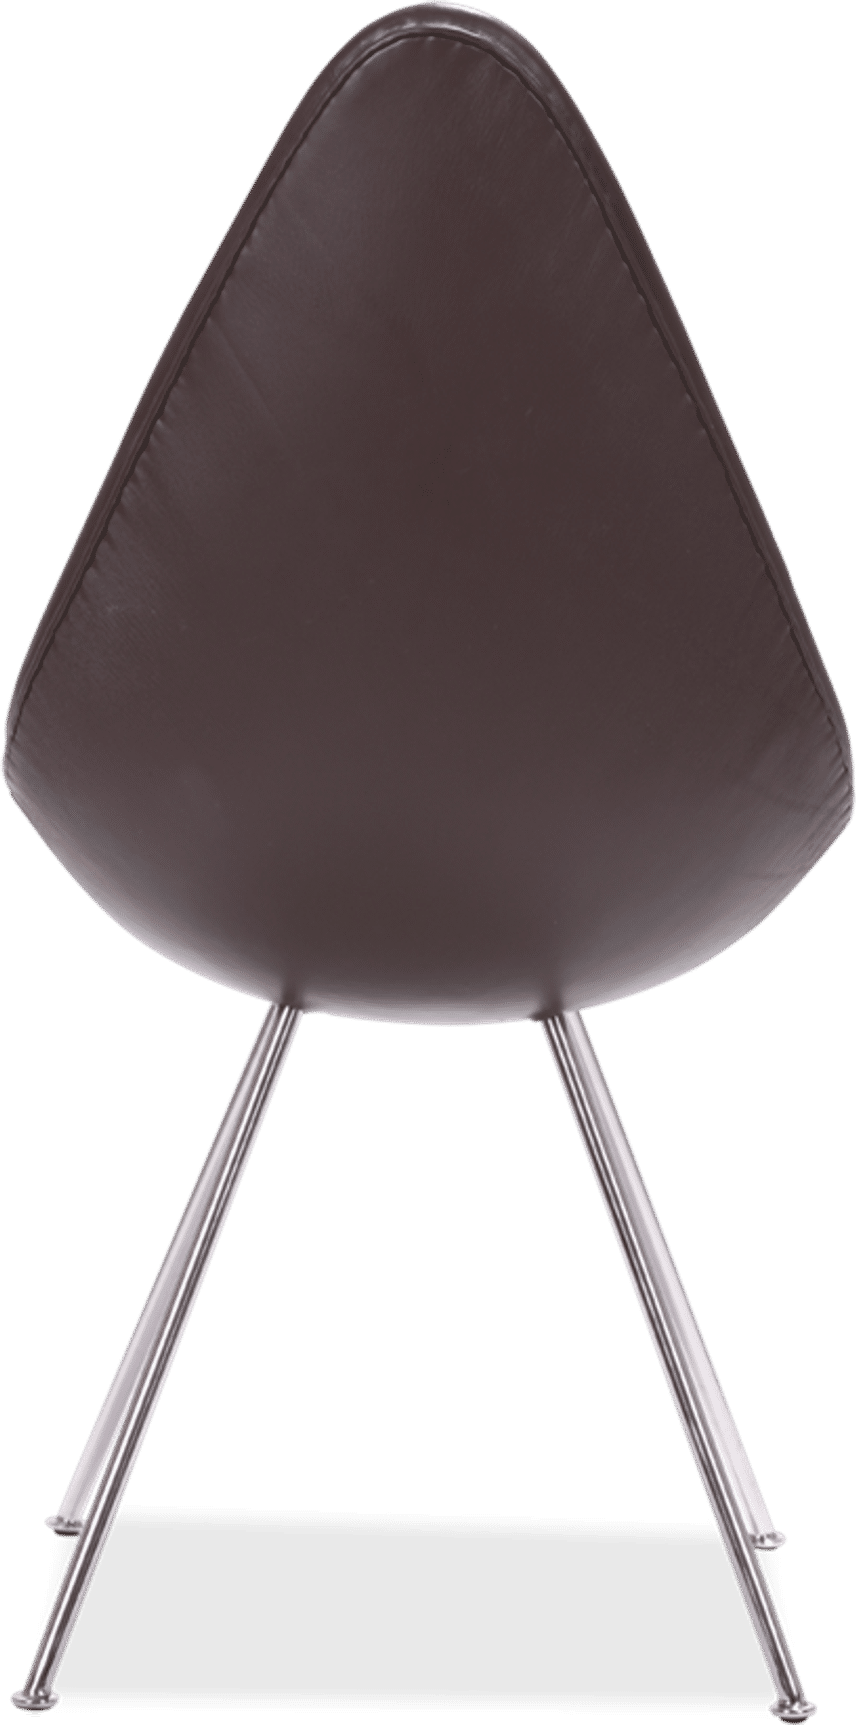 Drop Chair Premium Leather/Mocha image.